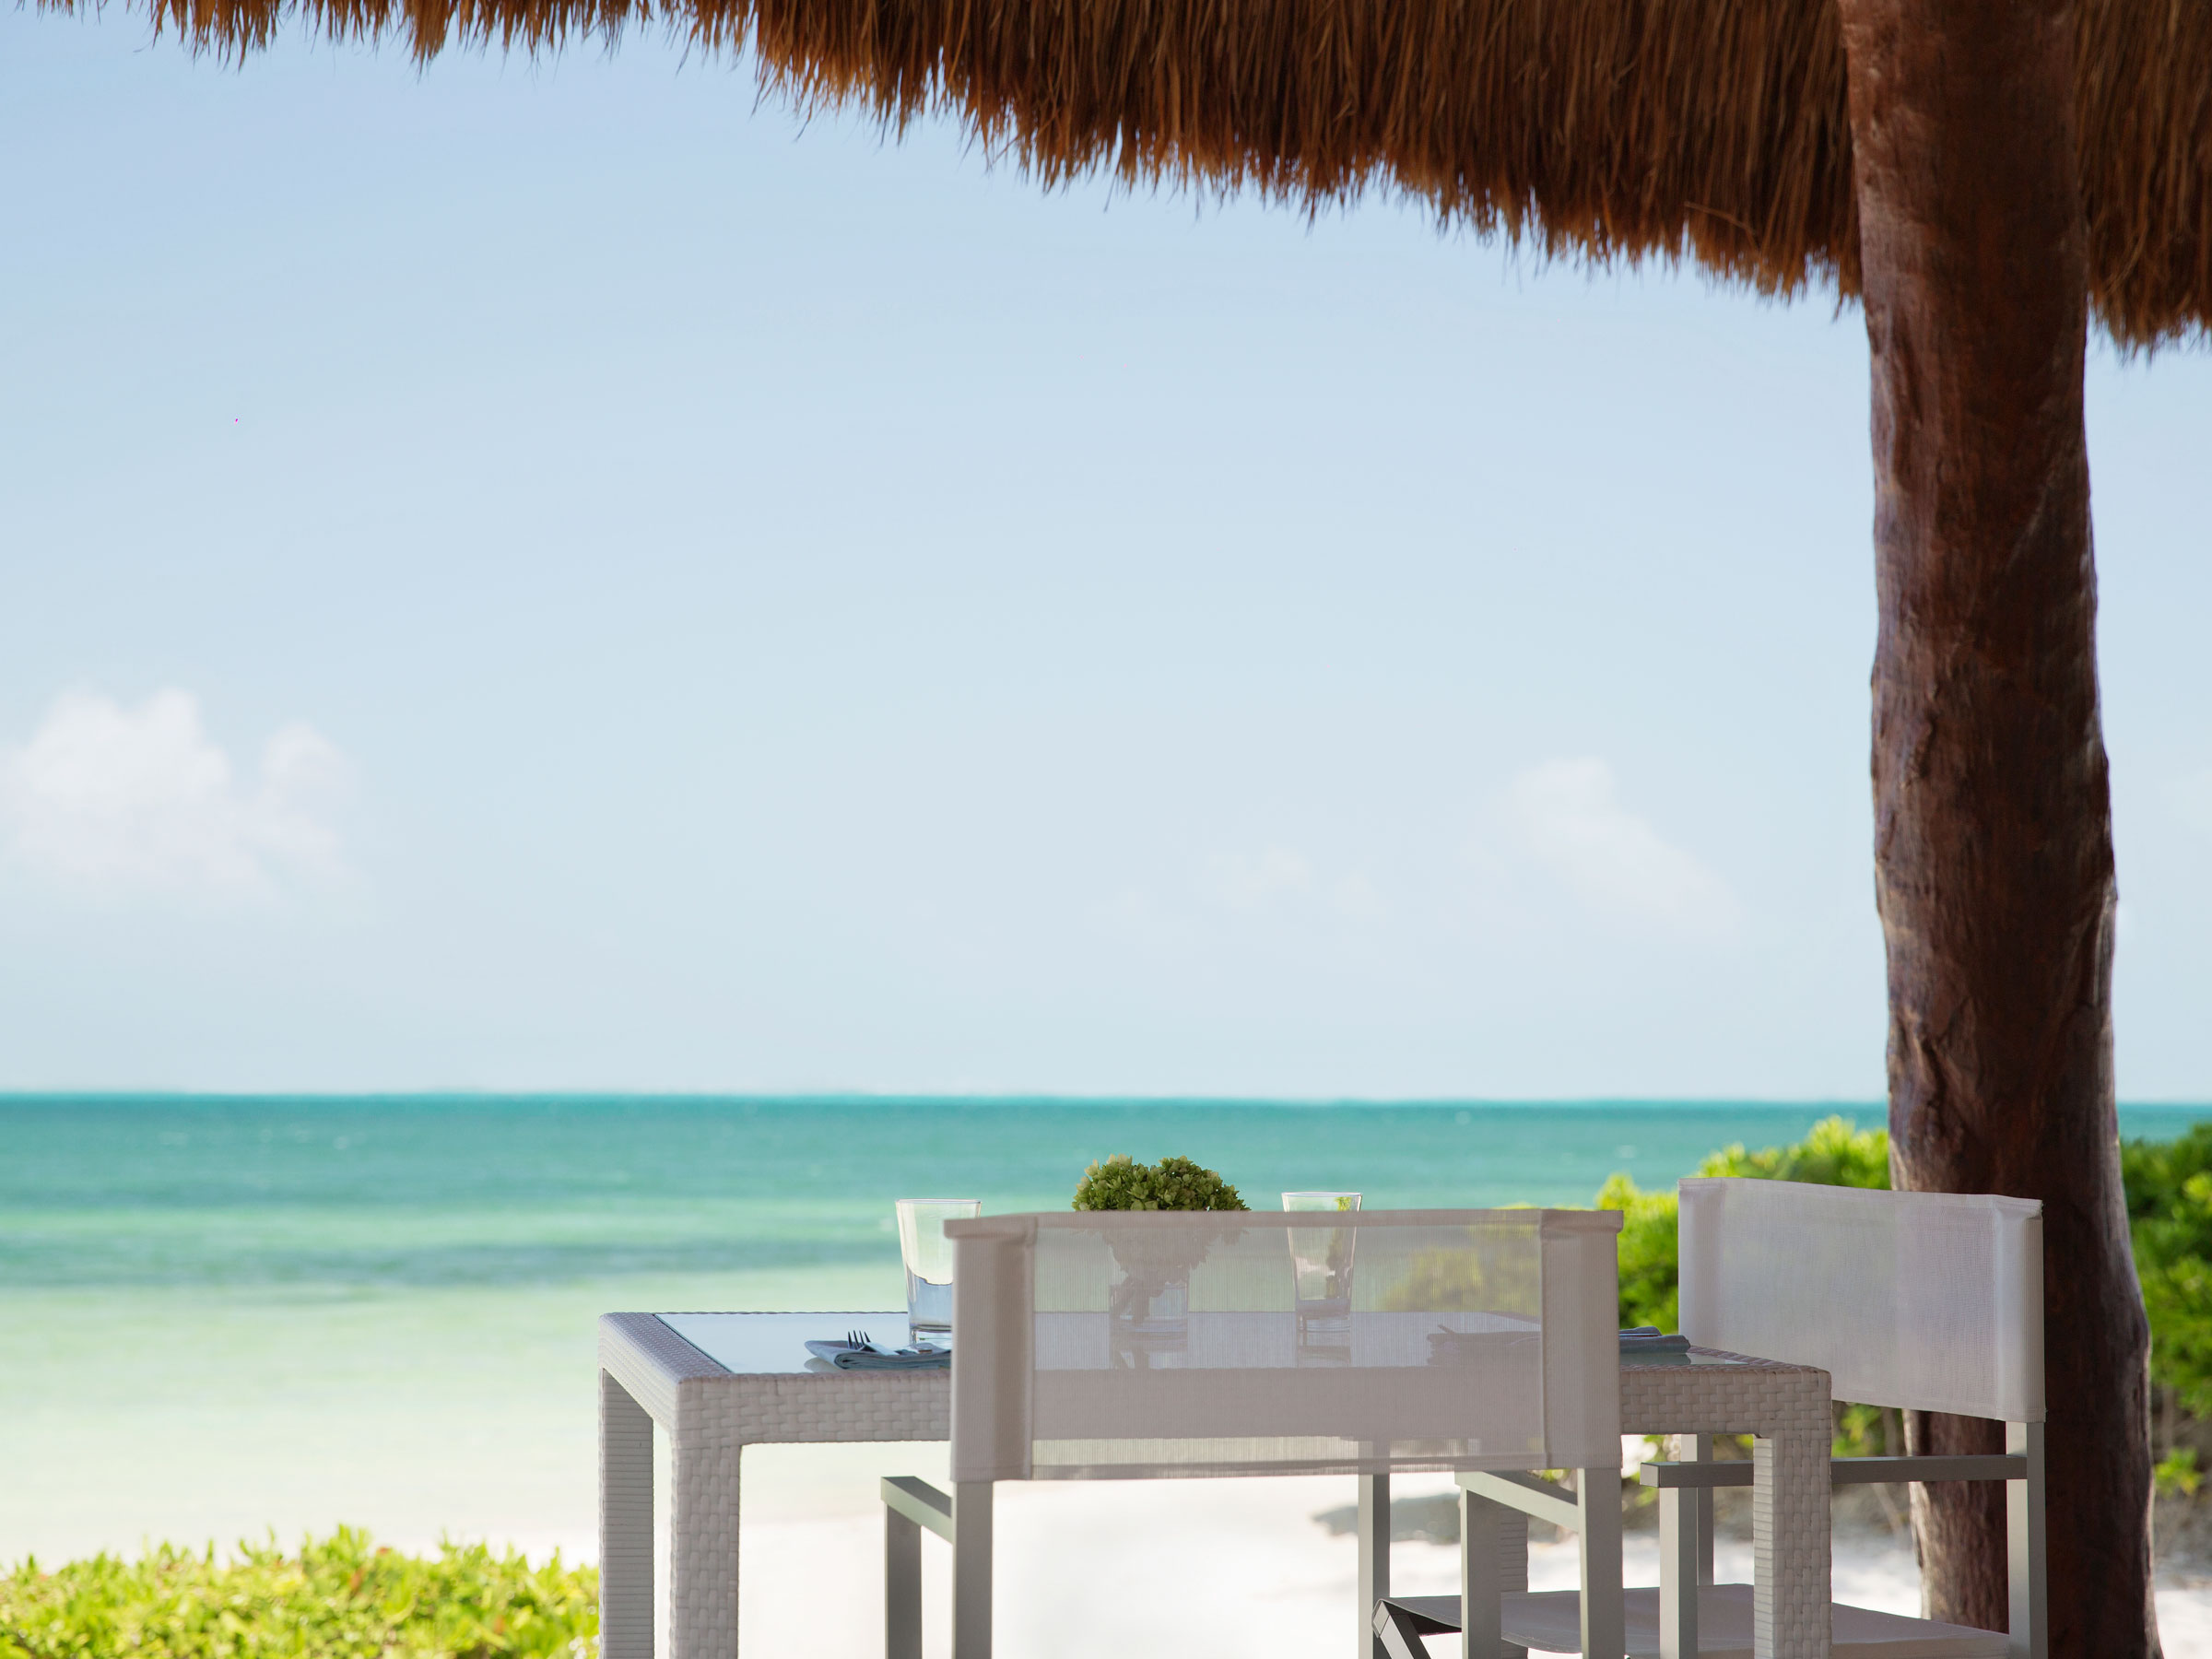 Ocean View Restaurant in Cancun Mexico